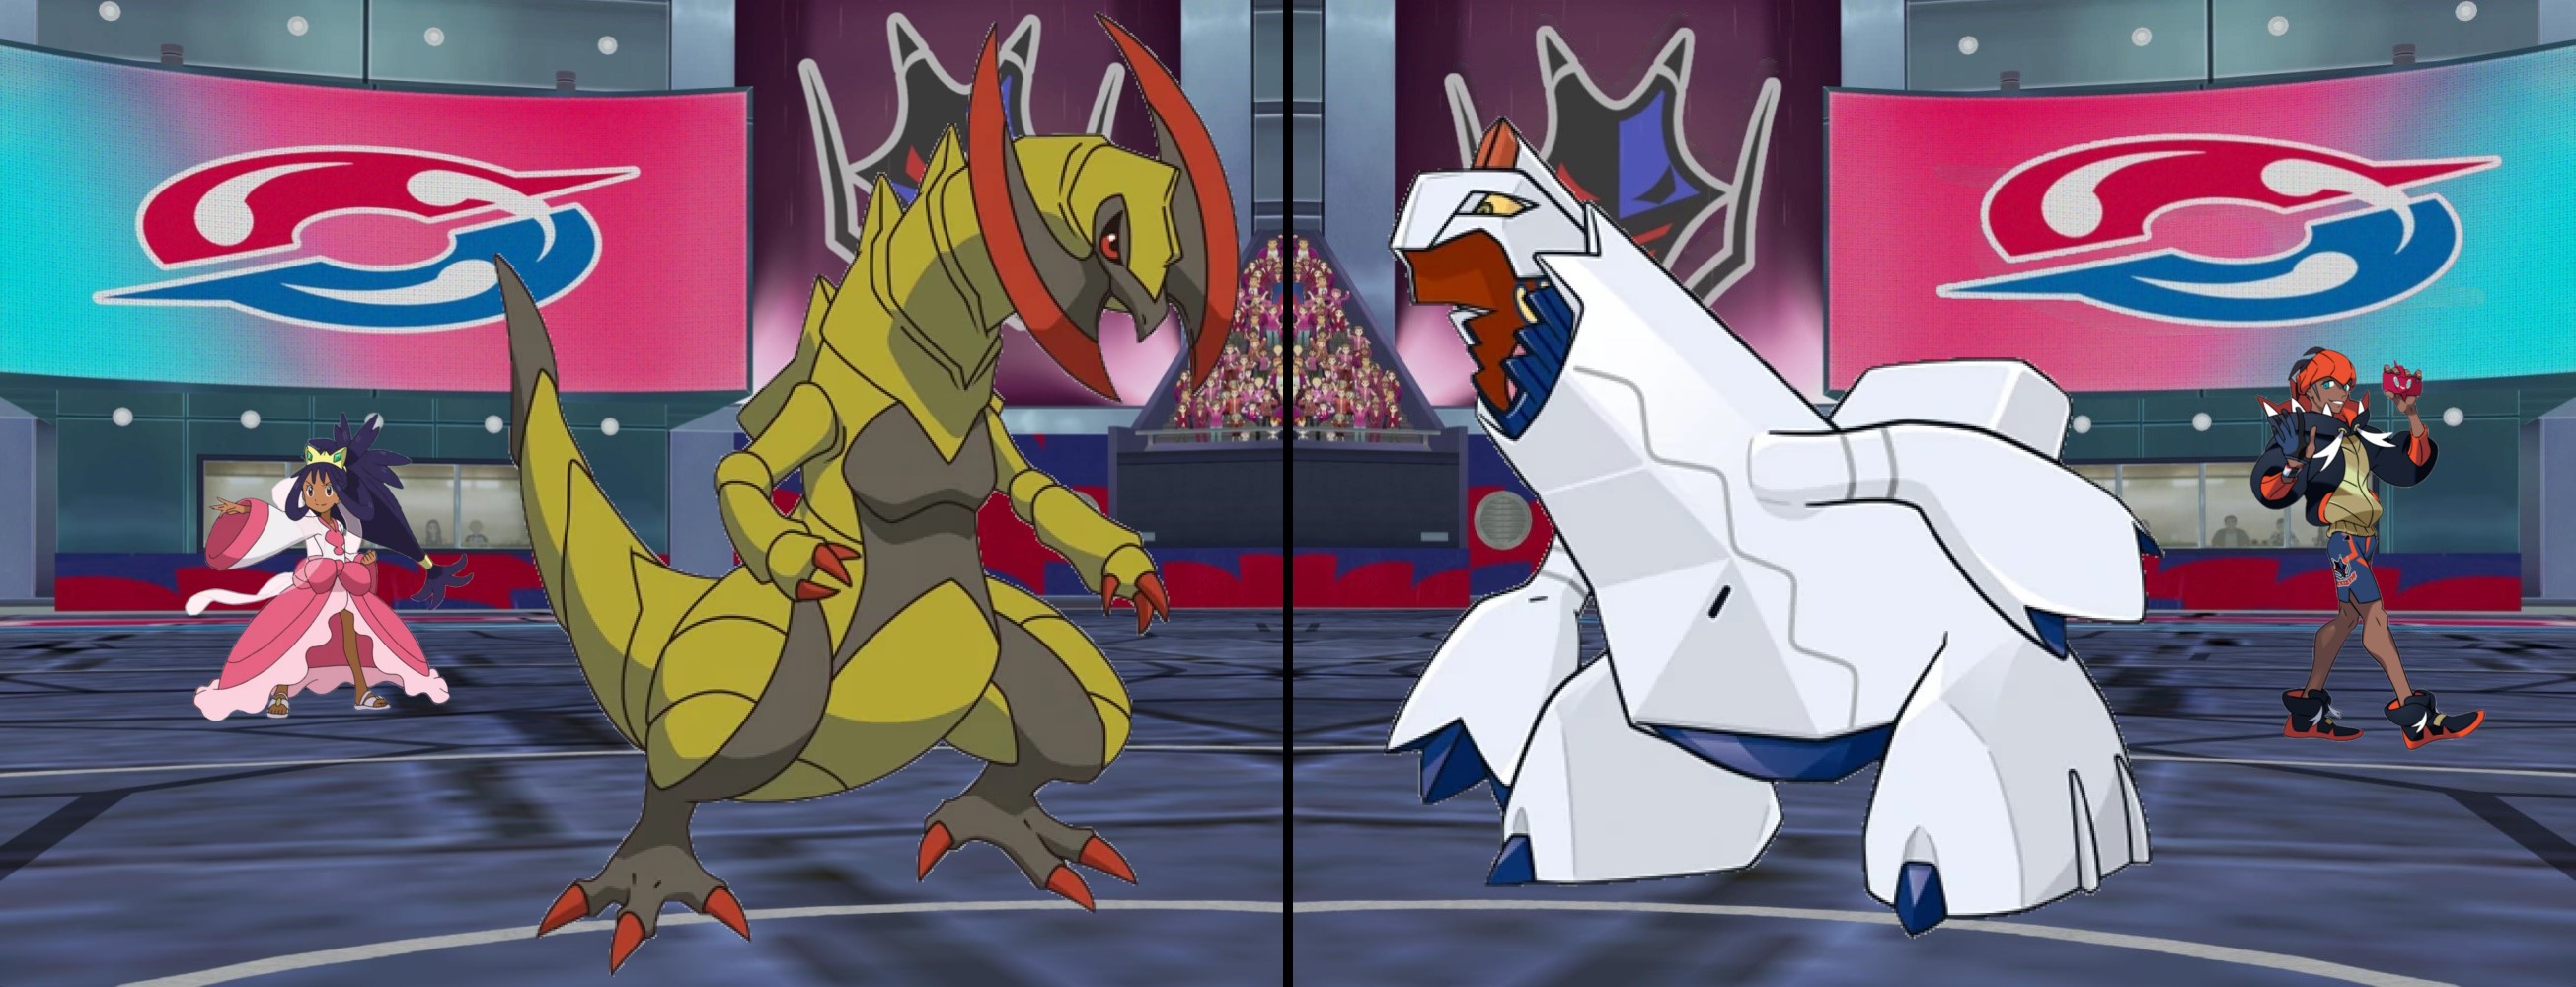 Pokemon Quest: Reshiram vs Zekrom by WillDinoMaster55 on DeviantArt